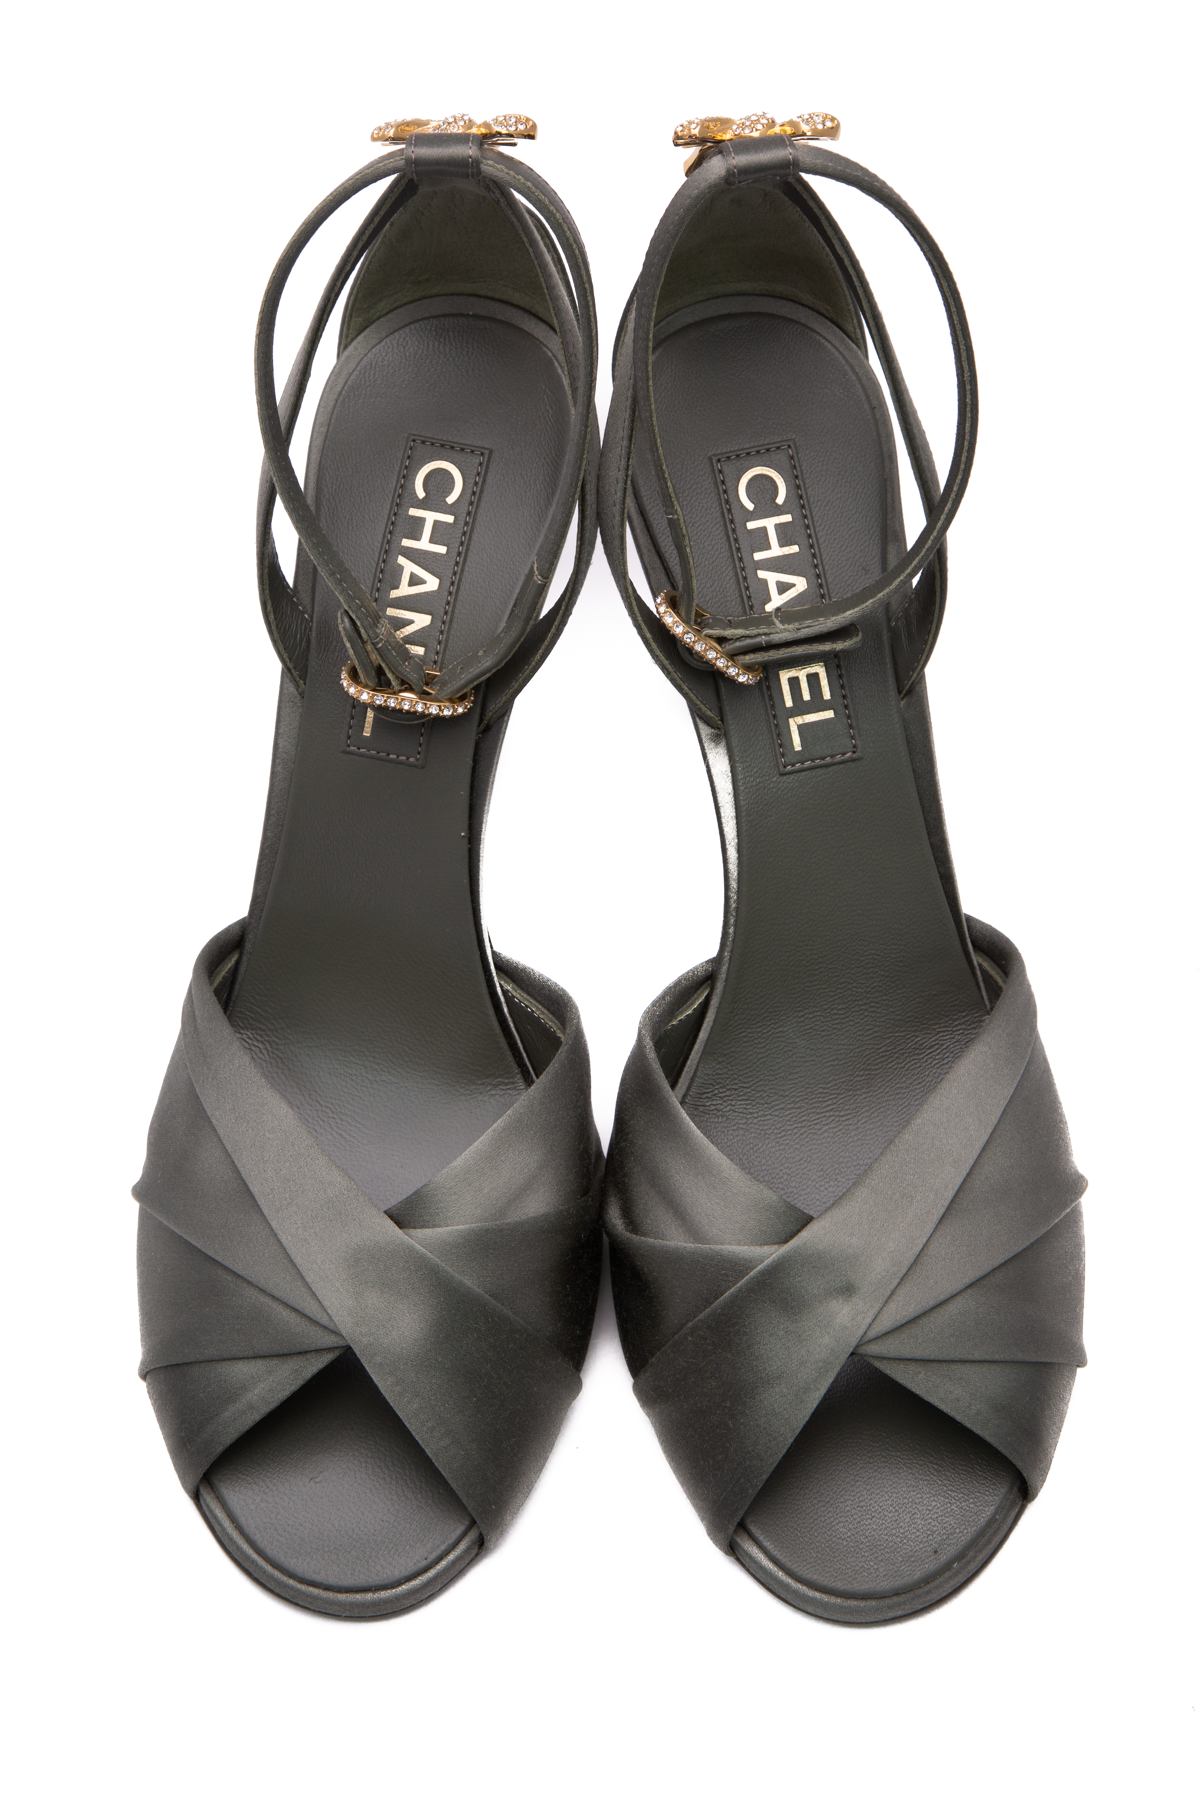 Chanel Black/Grey Glitter Cap Toe Slingback Pumps Size 6.5/37